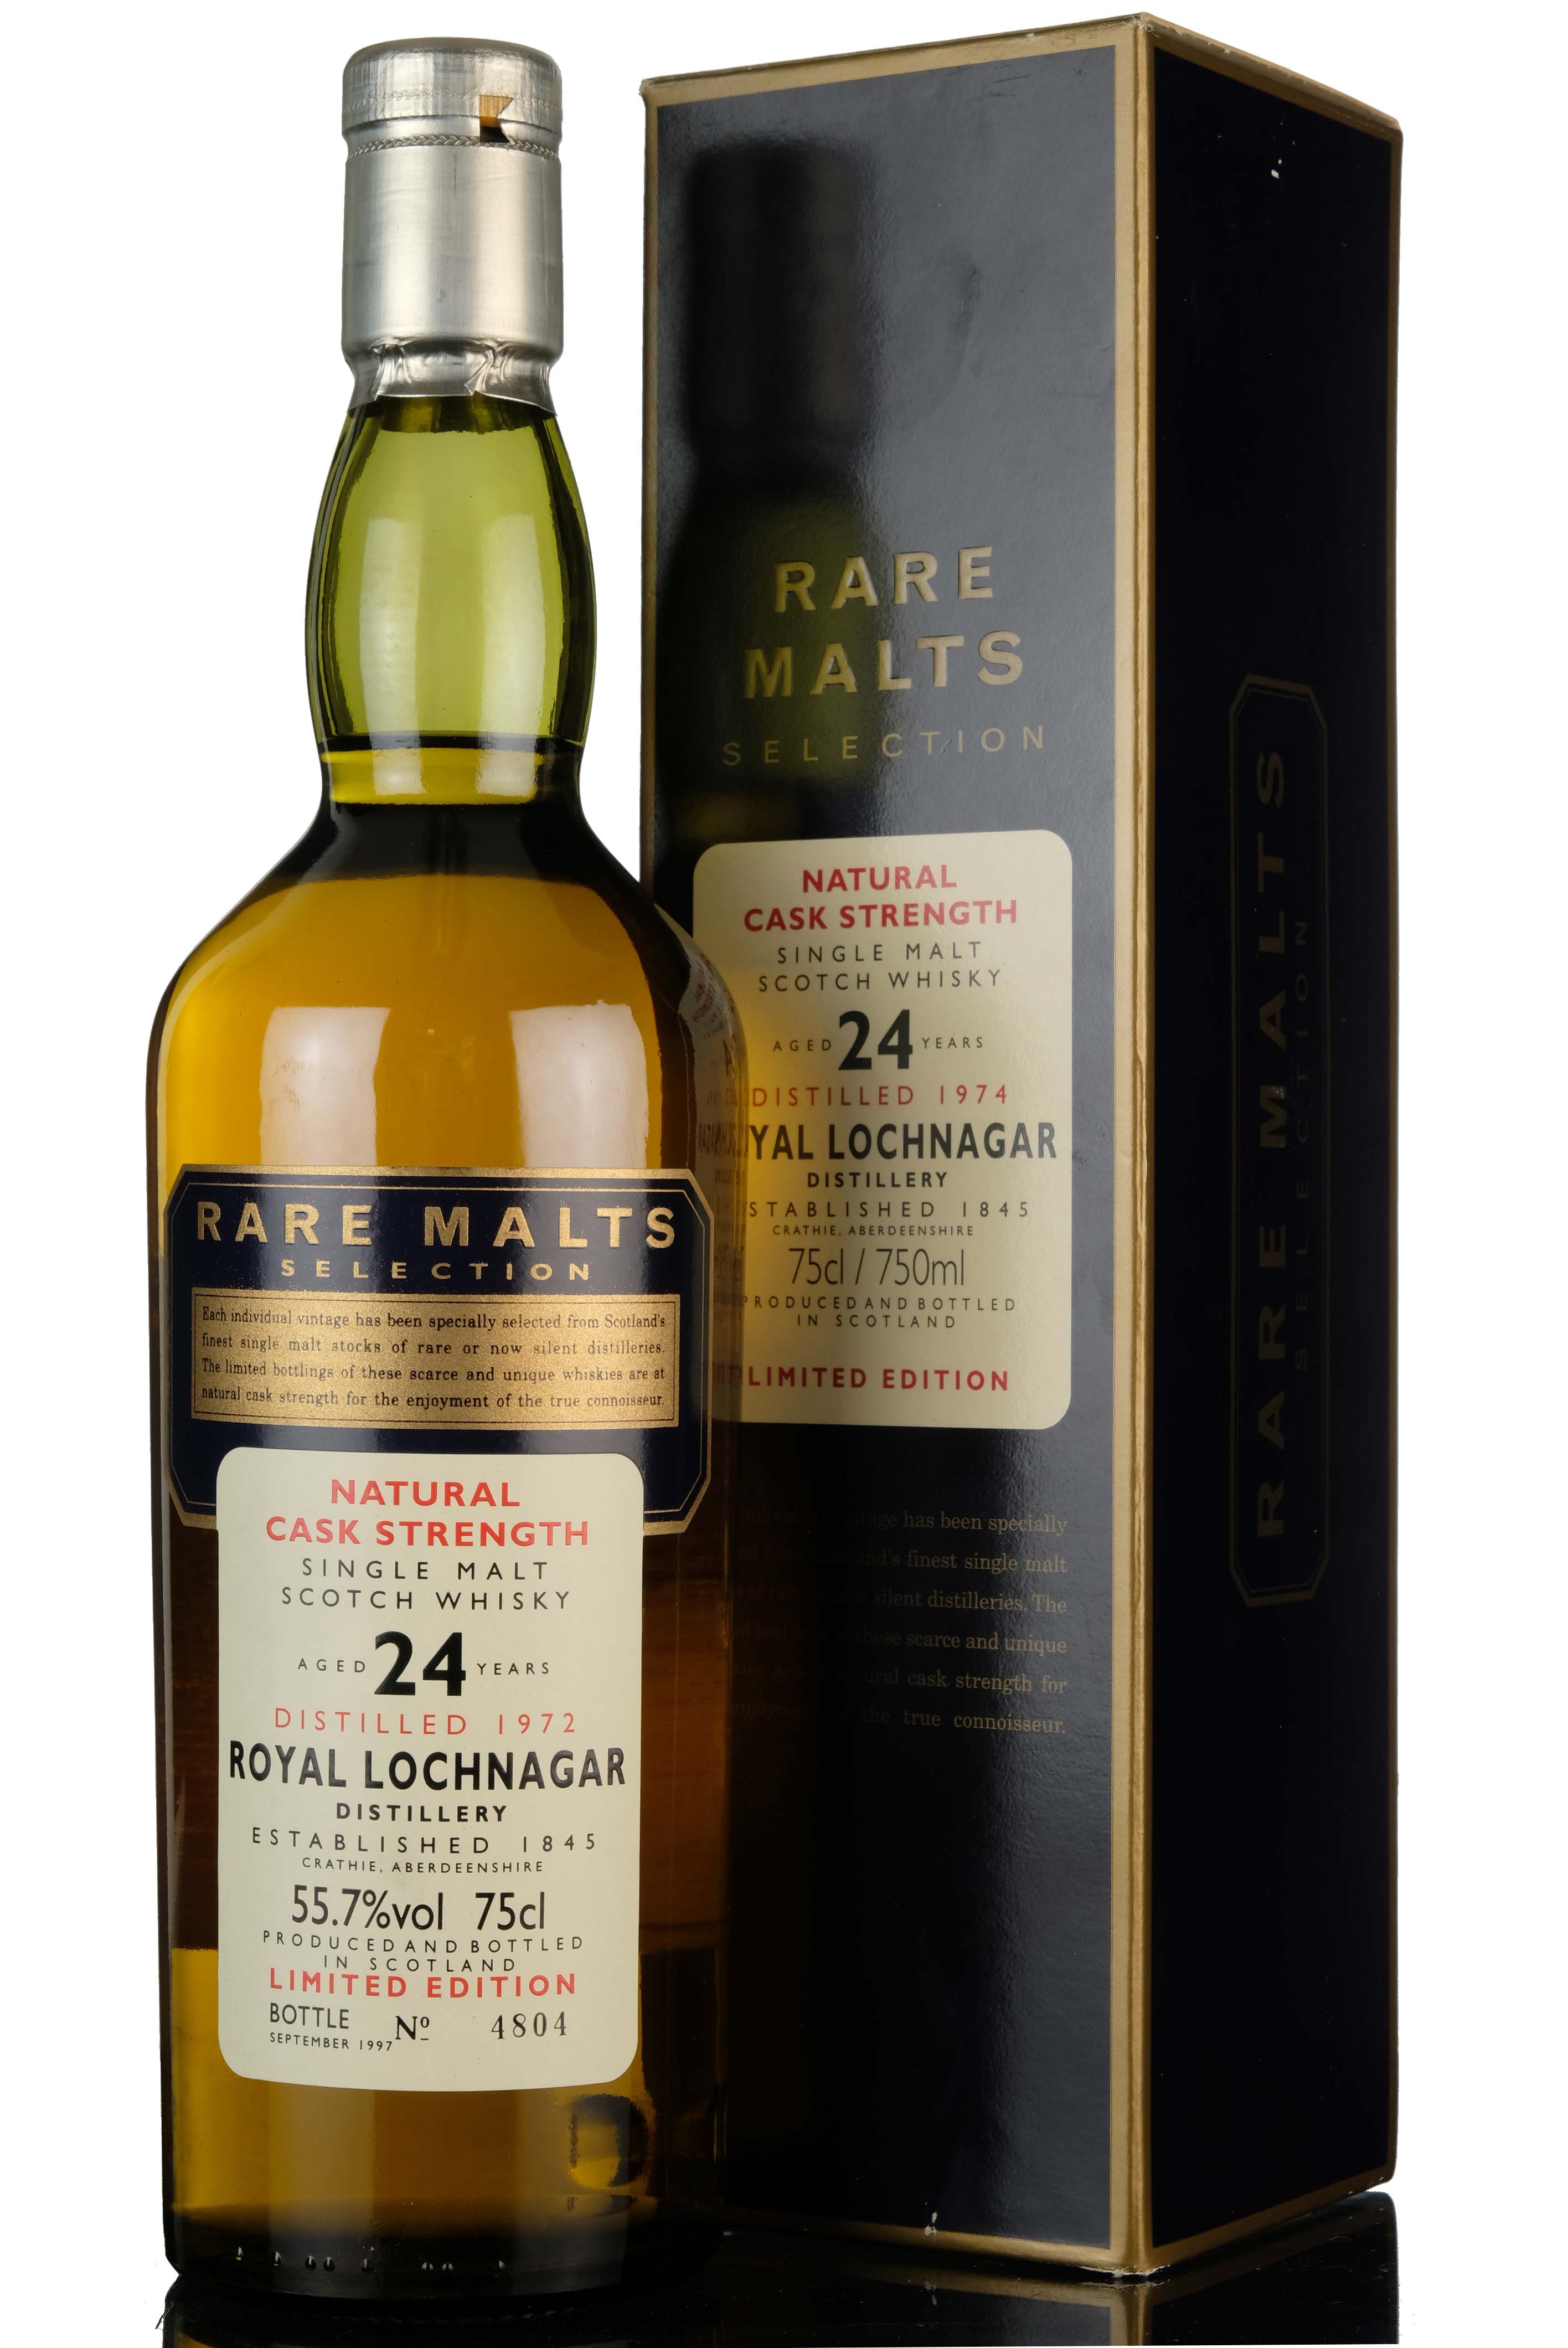 Royal Lochnagar 1972-1997 - 24 Year Old - Rare Malts 55.7%